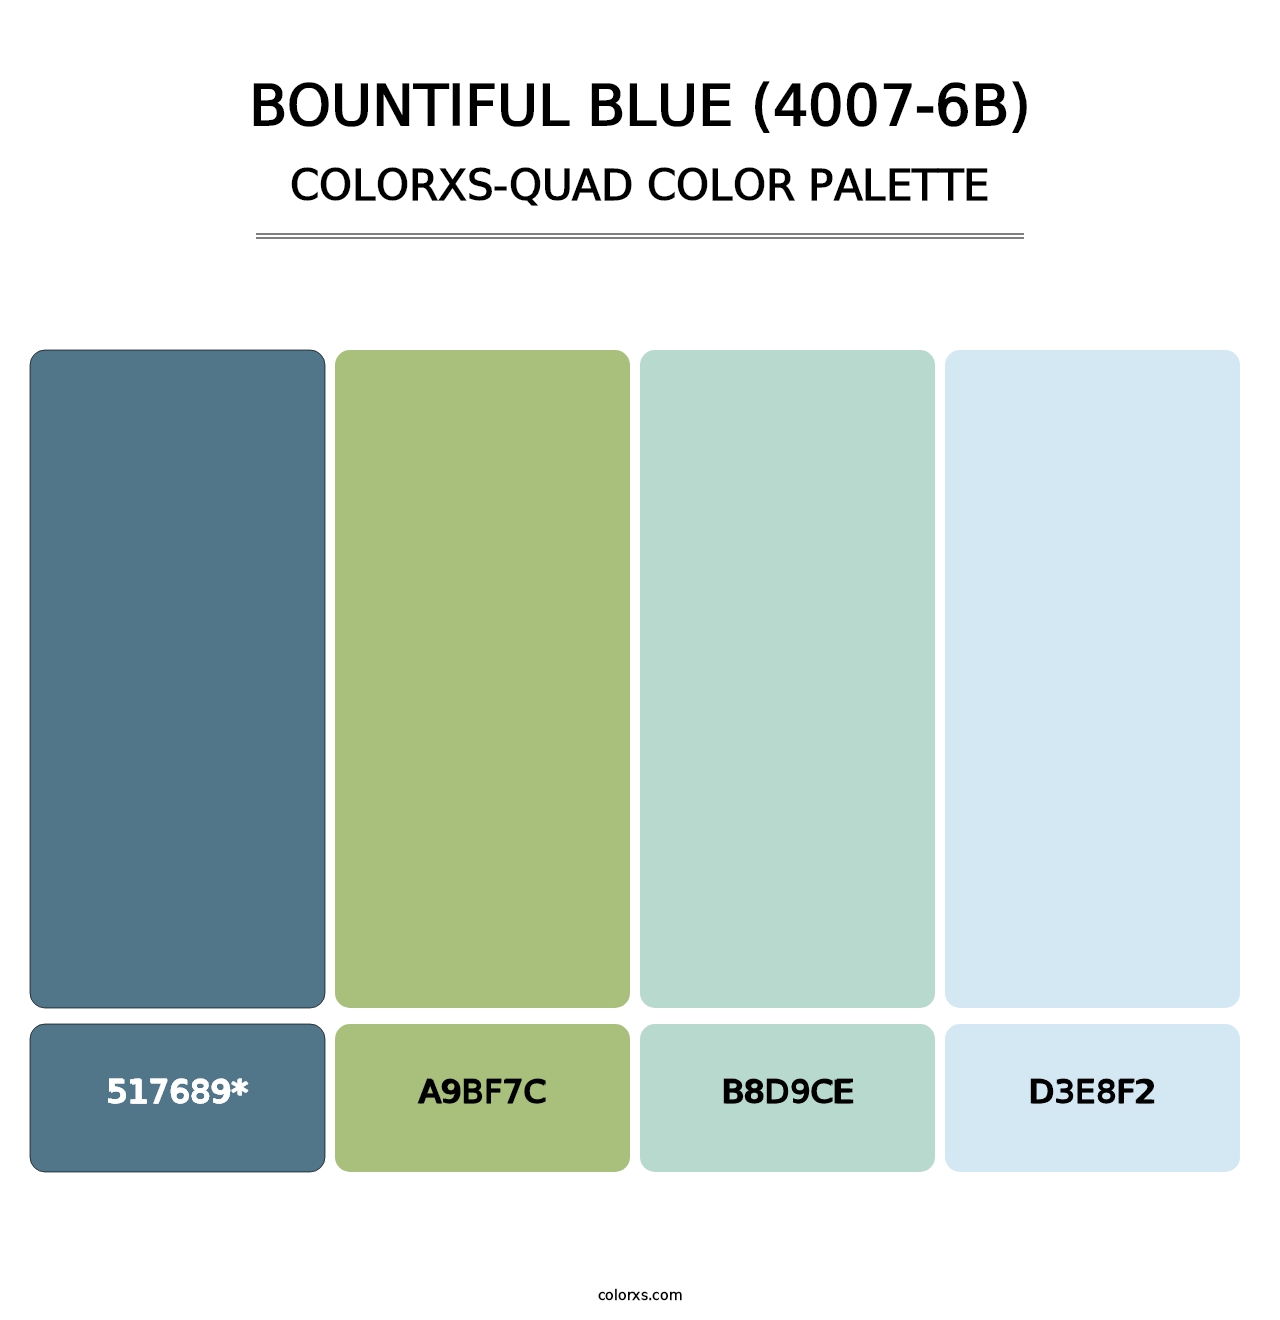 Bountiful Blue (4007-6B) - Colorxs Quad Palette